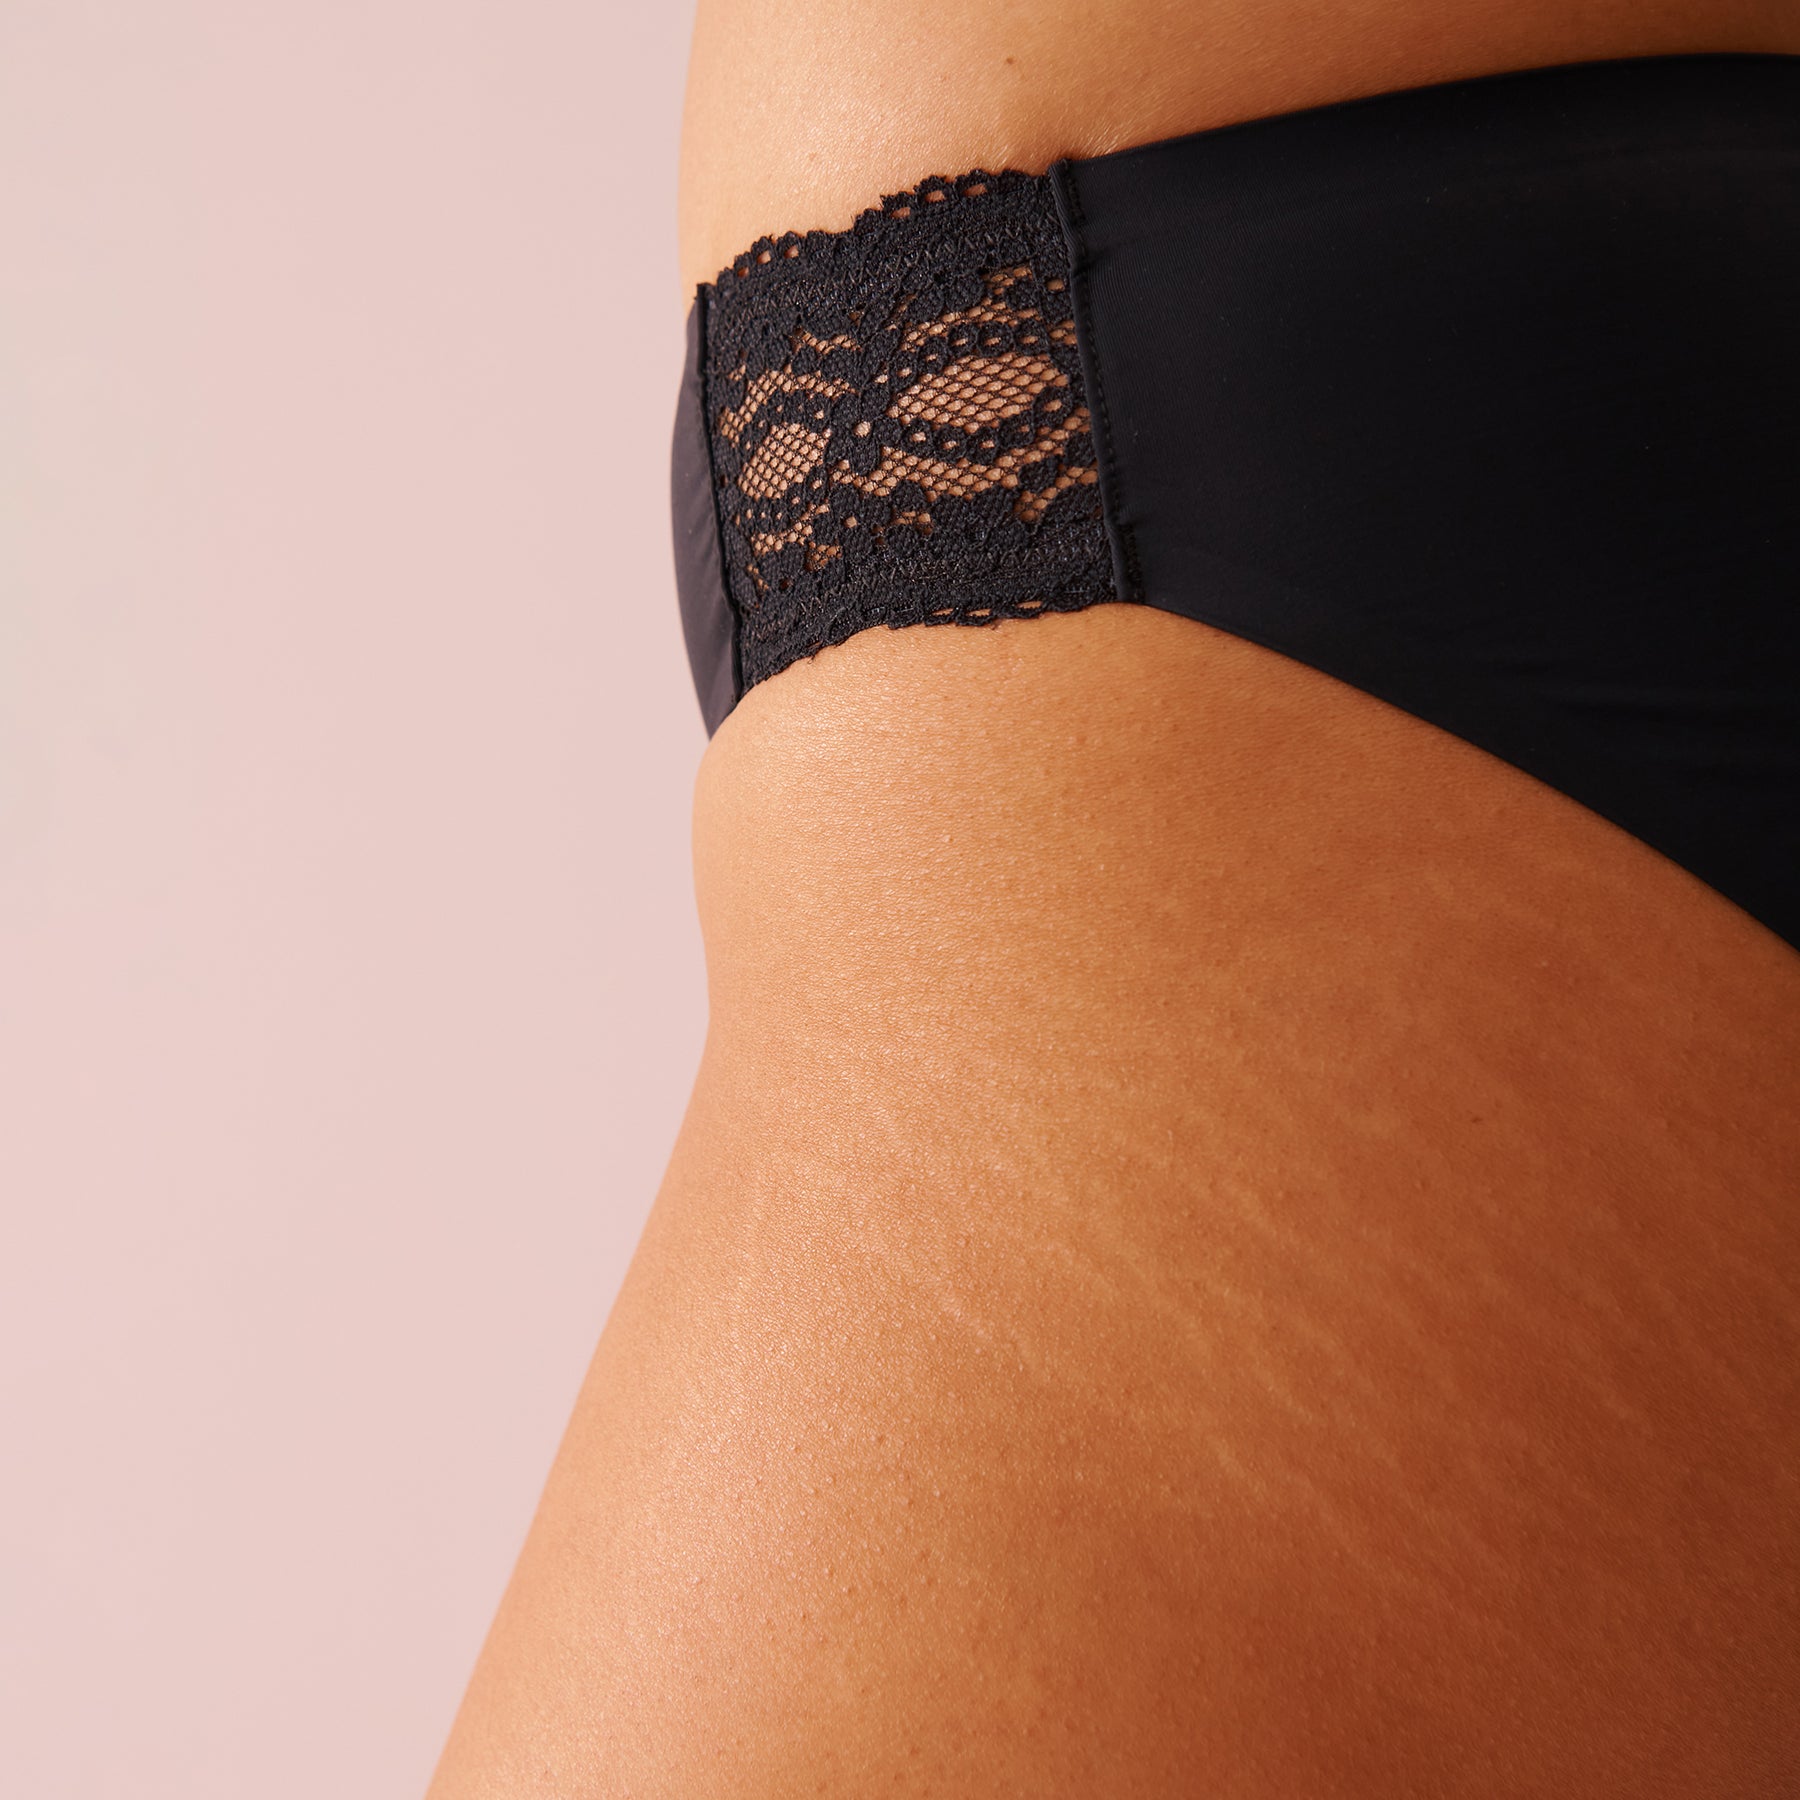 Lace detail of the black bikini period panty – NEWEX